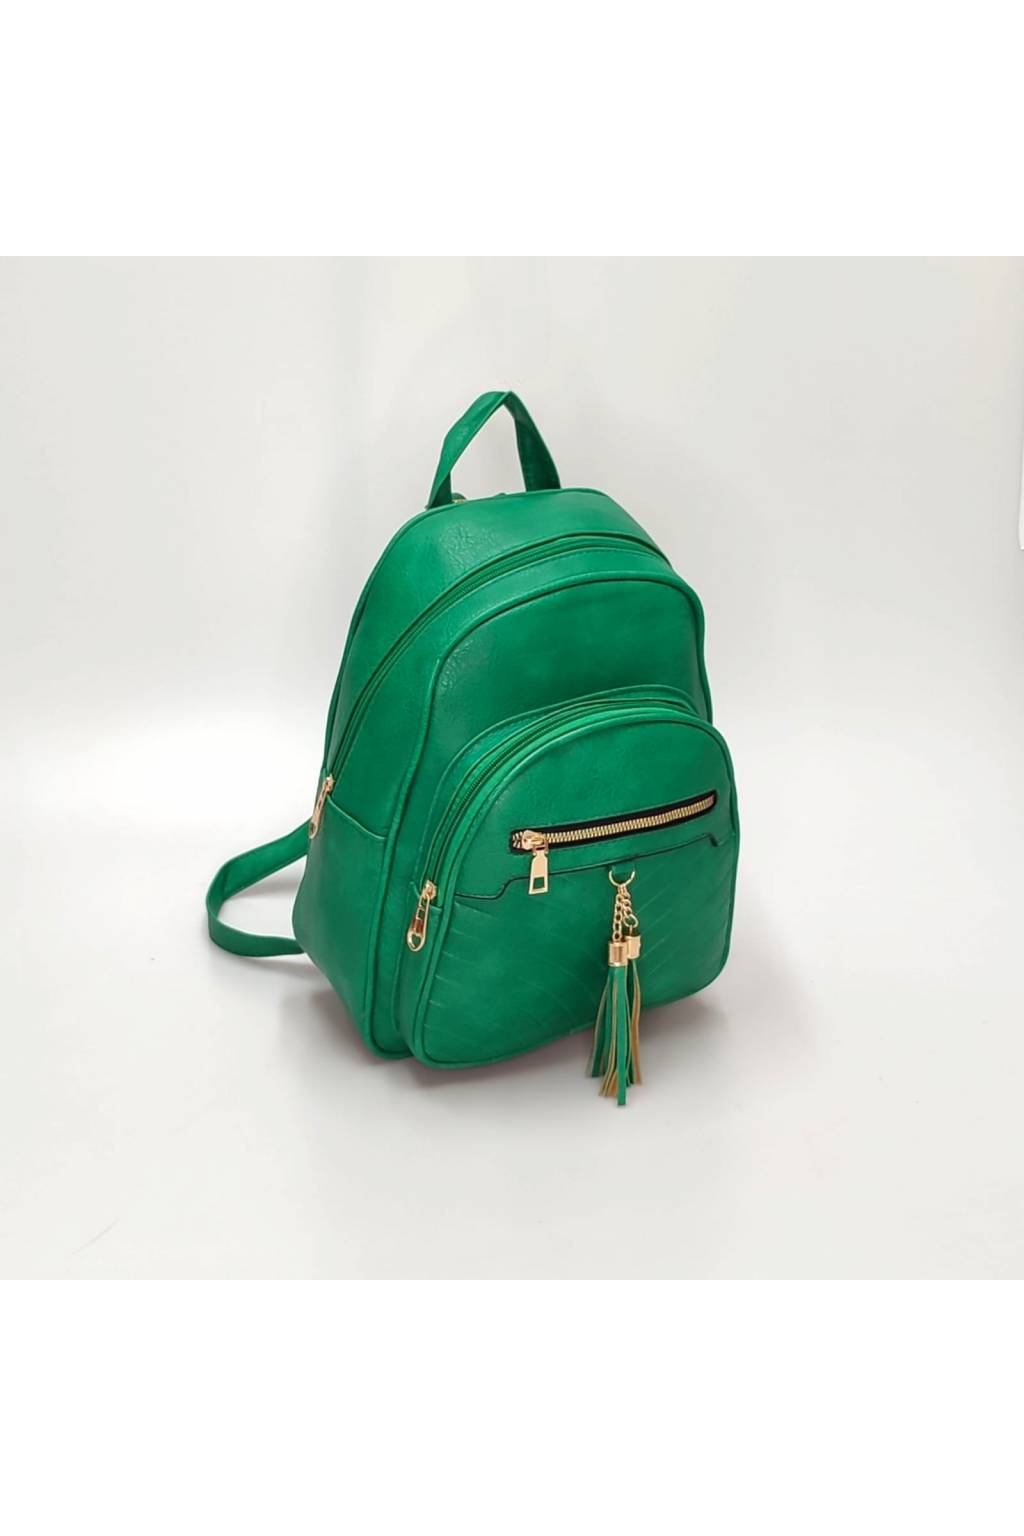 Dámsky ruksak 8183 zelený www.kabelky vypredaj (26)